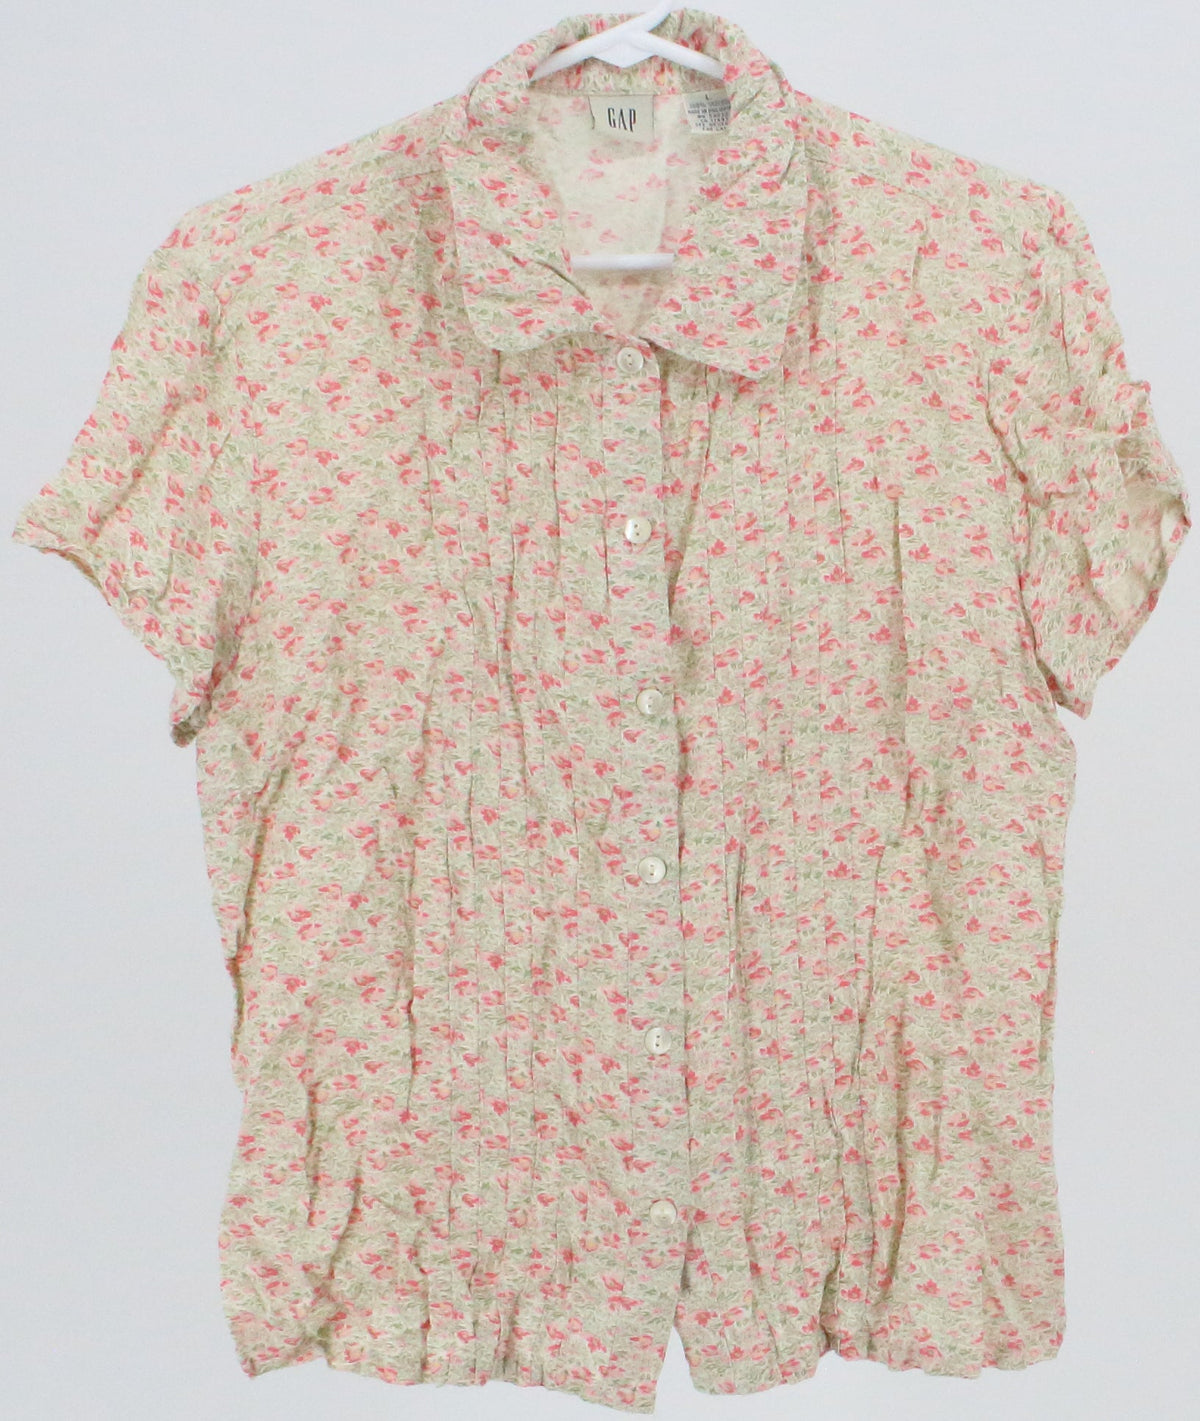 Gap Beige Green and Pink Flower Print Short Sleeve Blouse